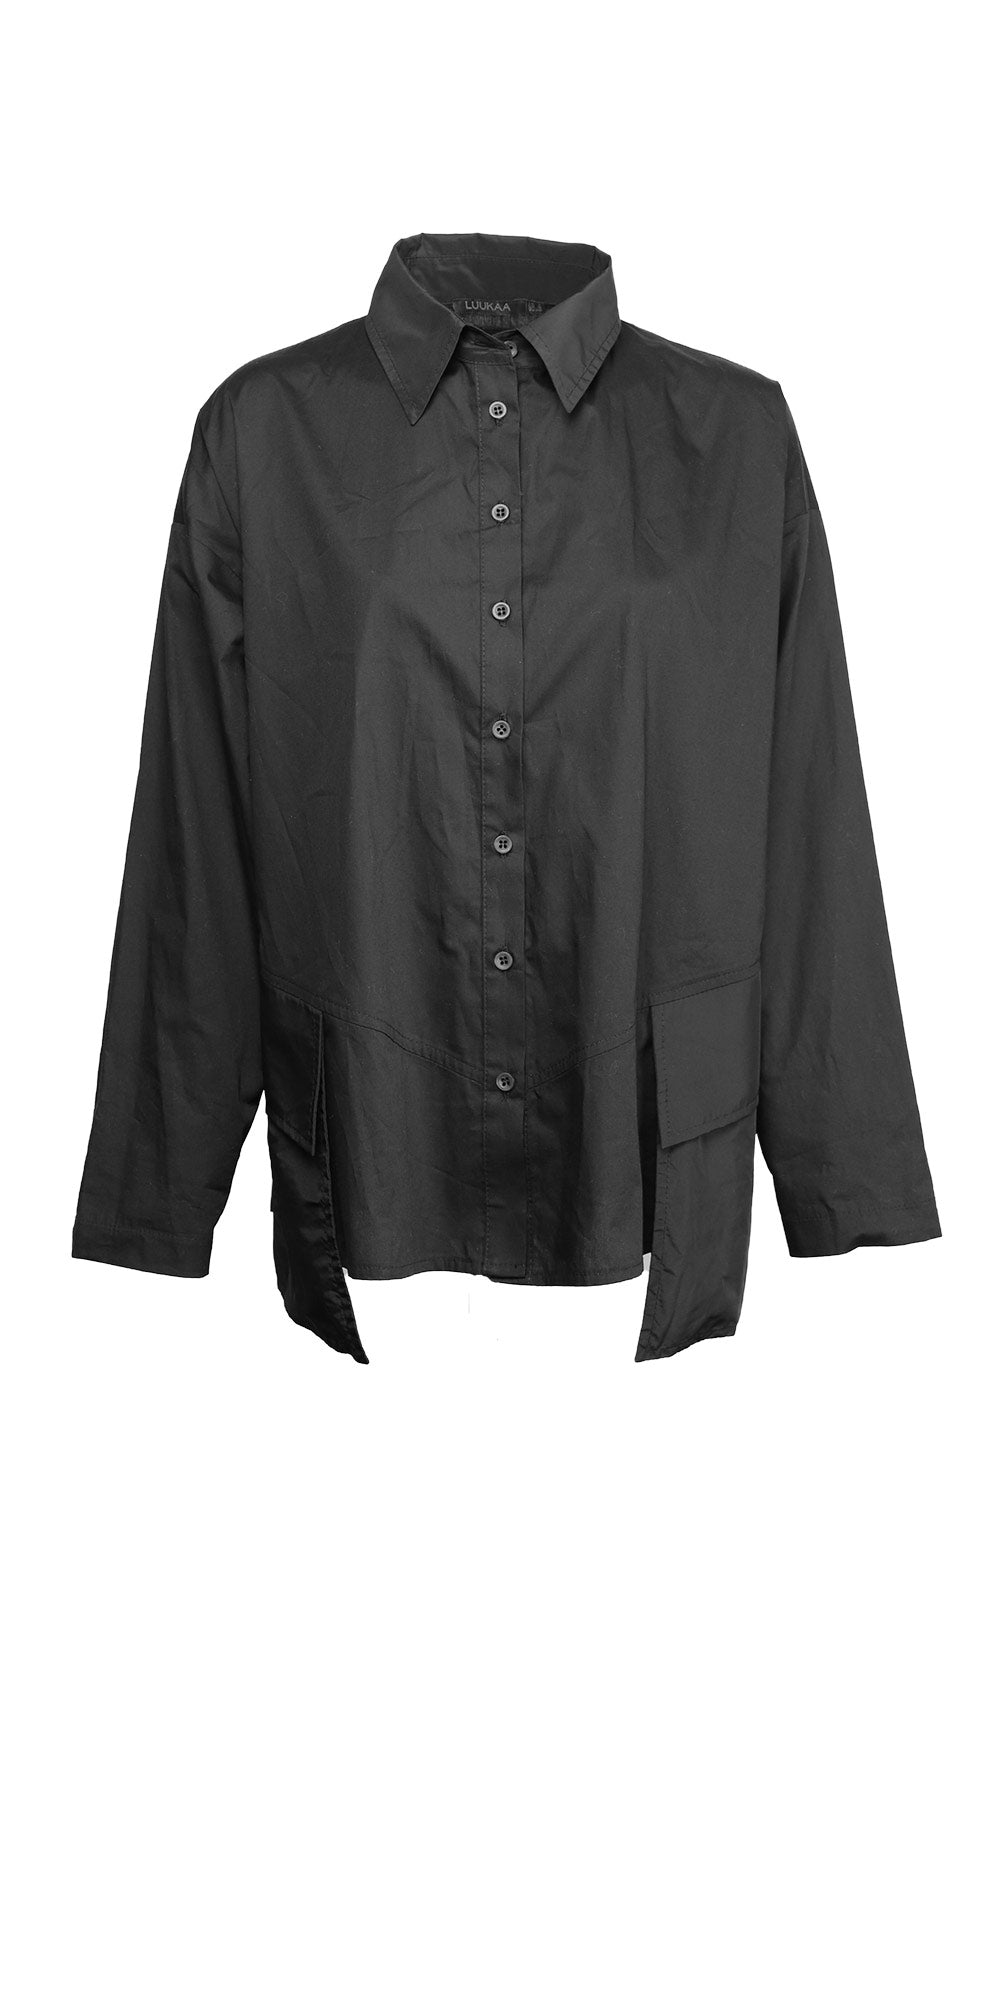 21k135 Luukaa Shirt/Jacket